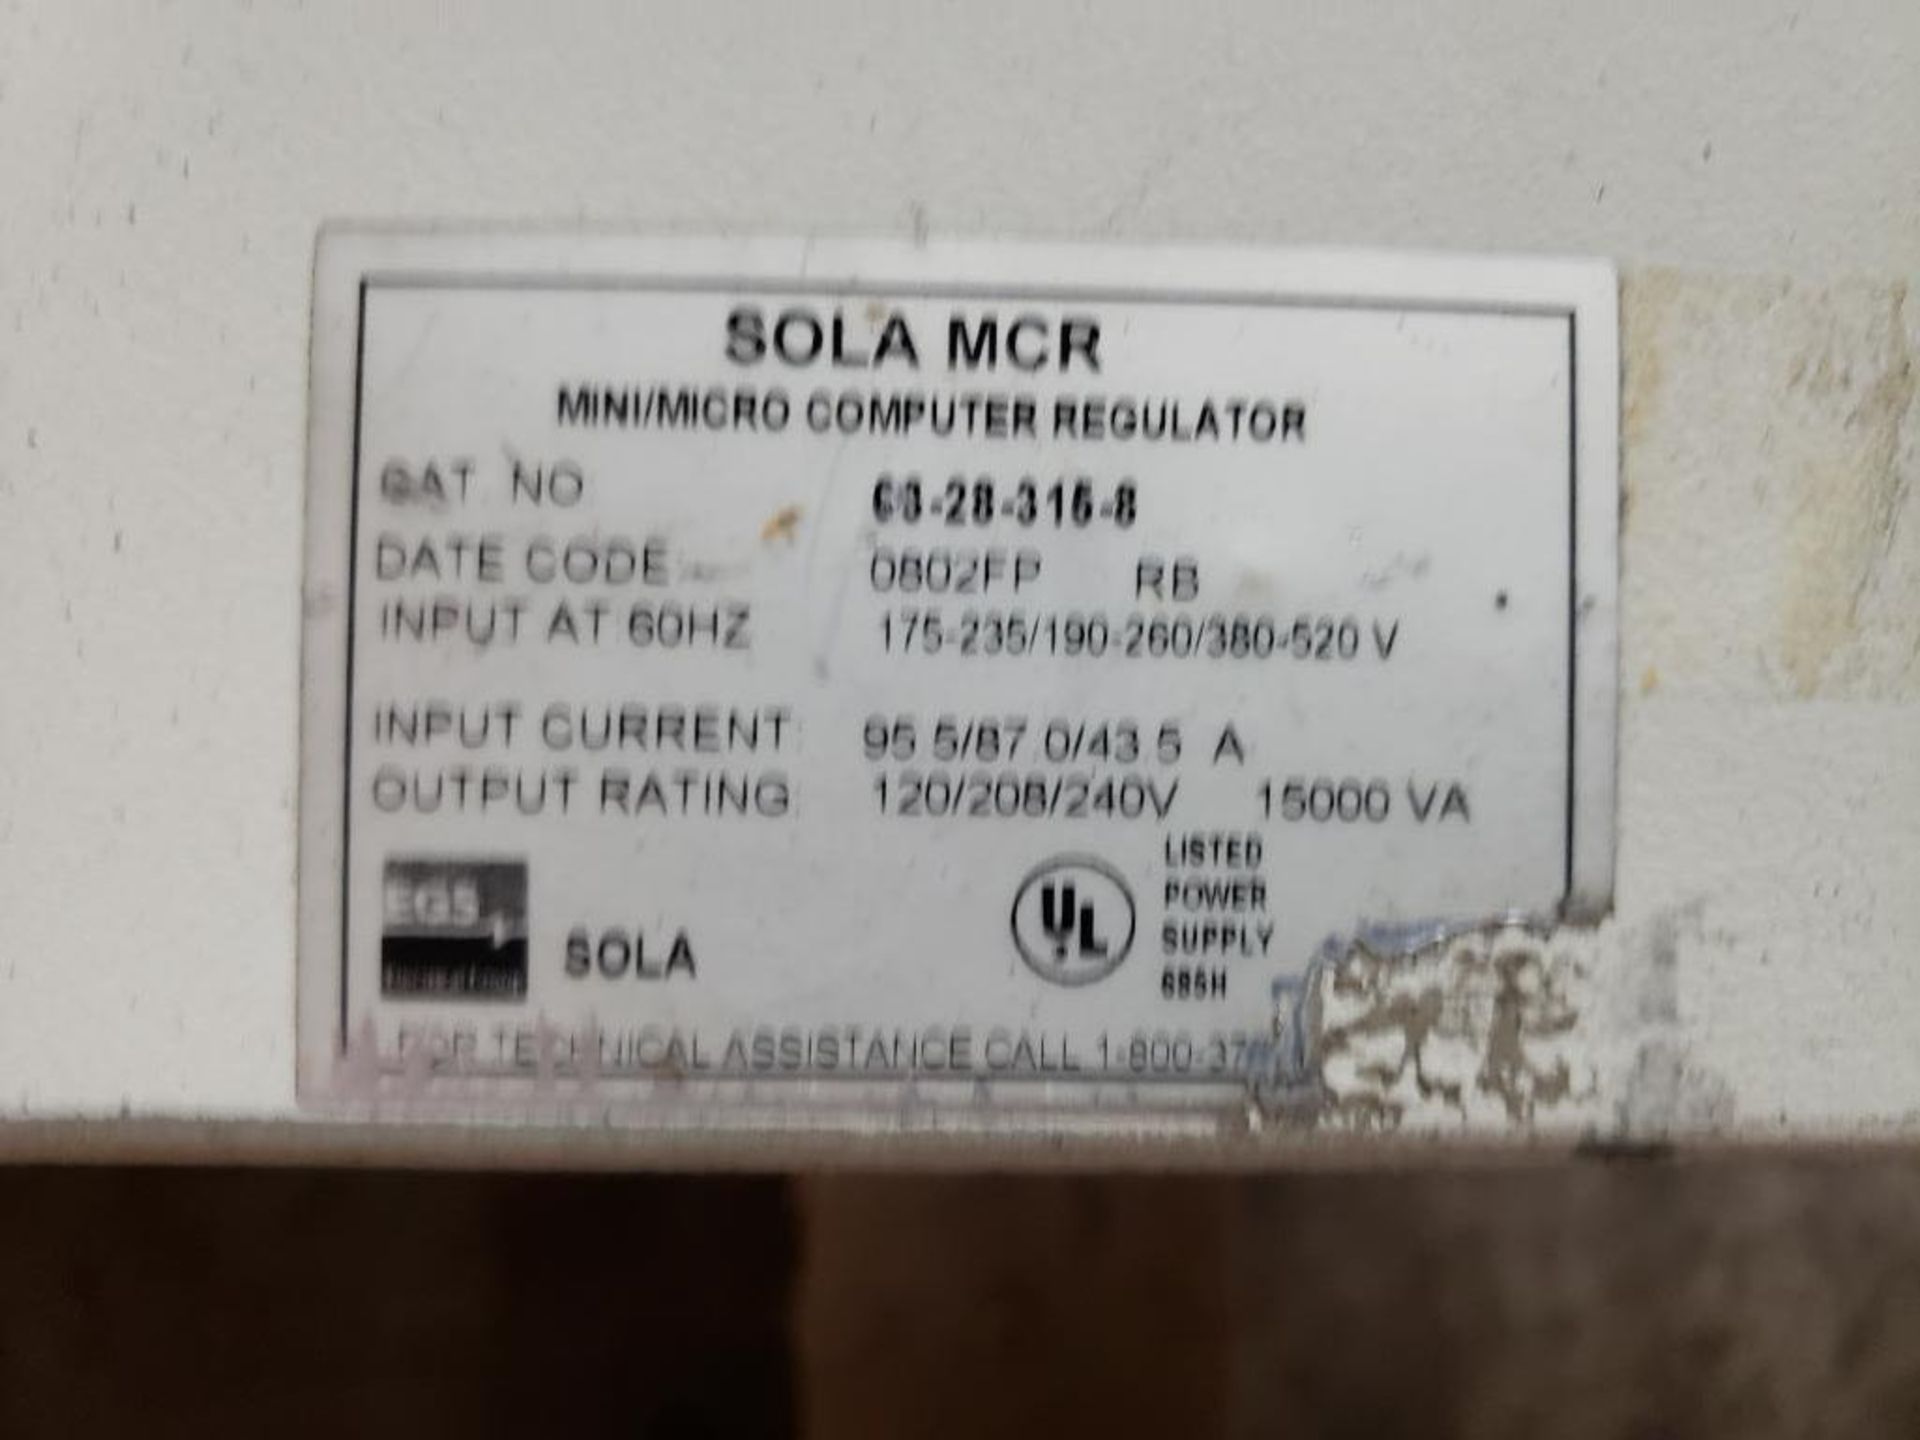 Sola MCR mini/micro computer regulator 68-28-316-8. 15000VA. - Image 3 of 3